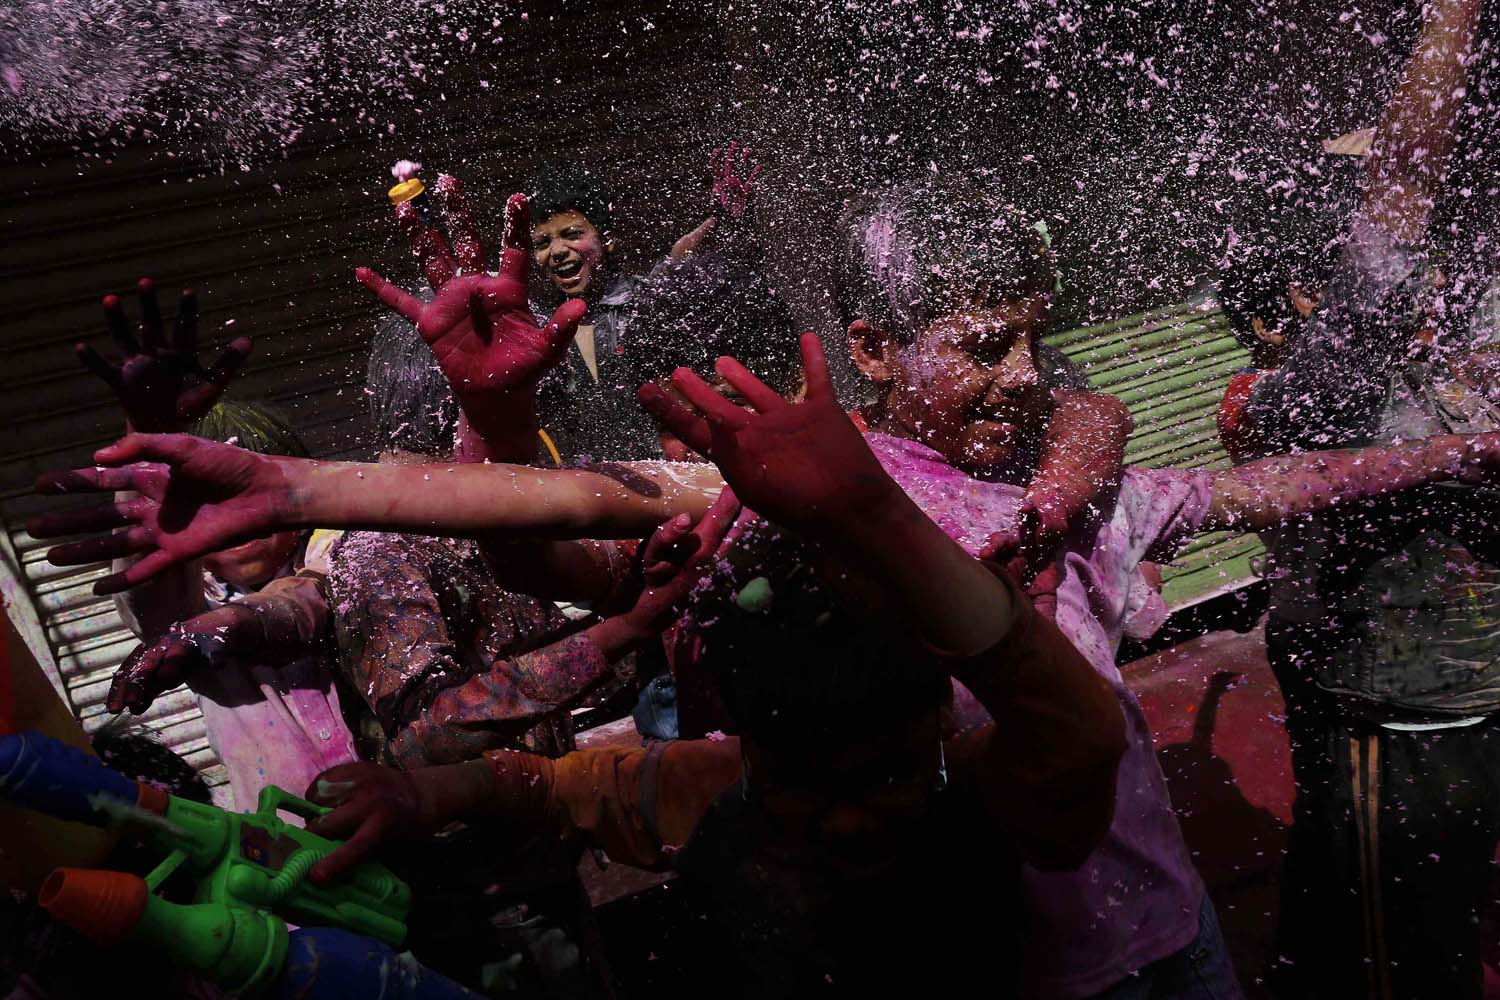 Boys spray coloured foam during Holi celebrations at a lane near the Bankey Bihari temple in Vrindavan